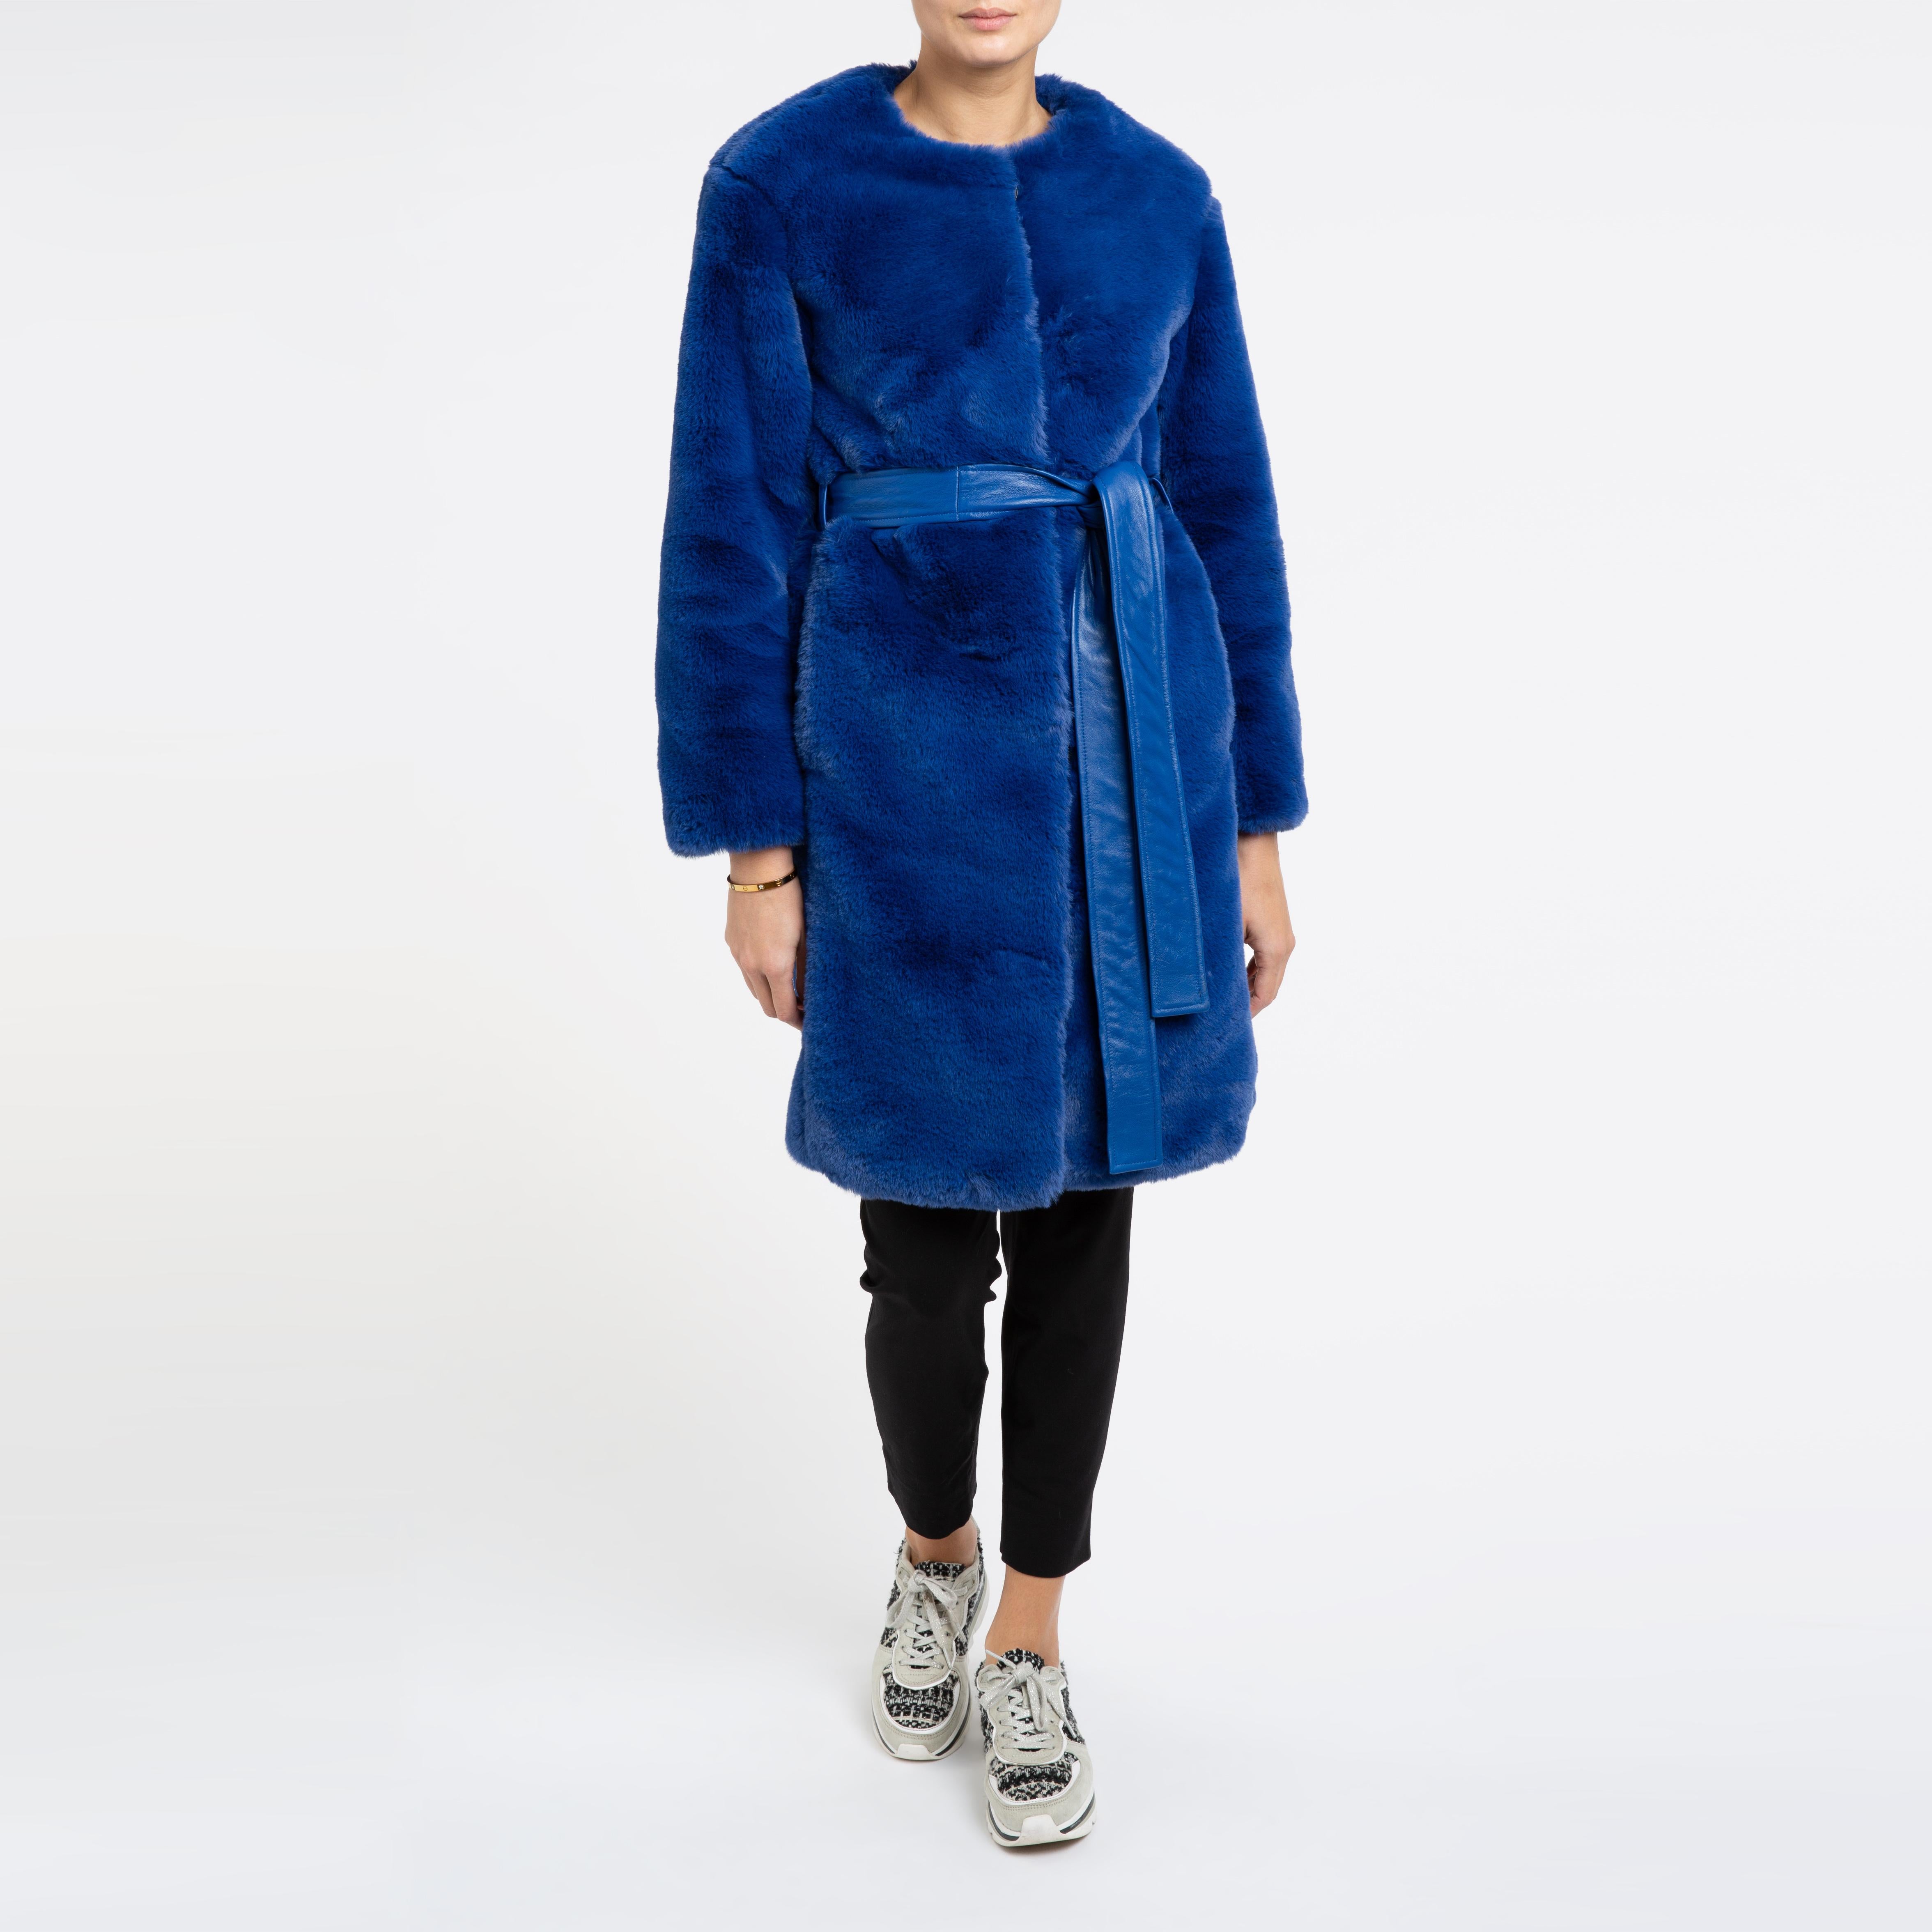 Verheyen London Serena  Collarless Faux Fur Coat in Blue - Size uk 10  For Sale 1